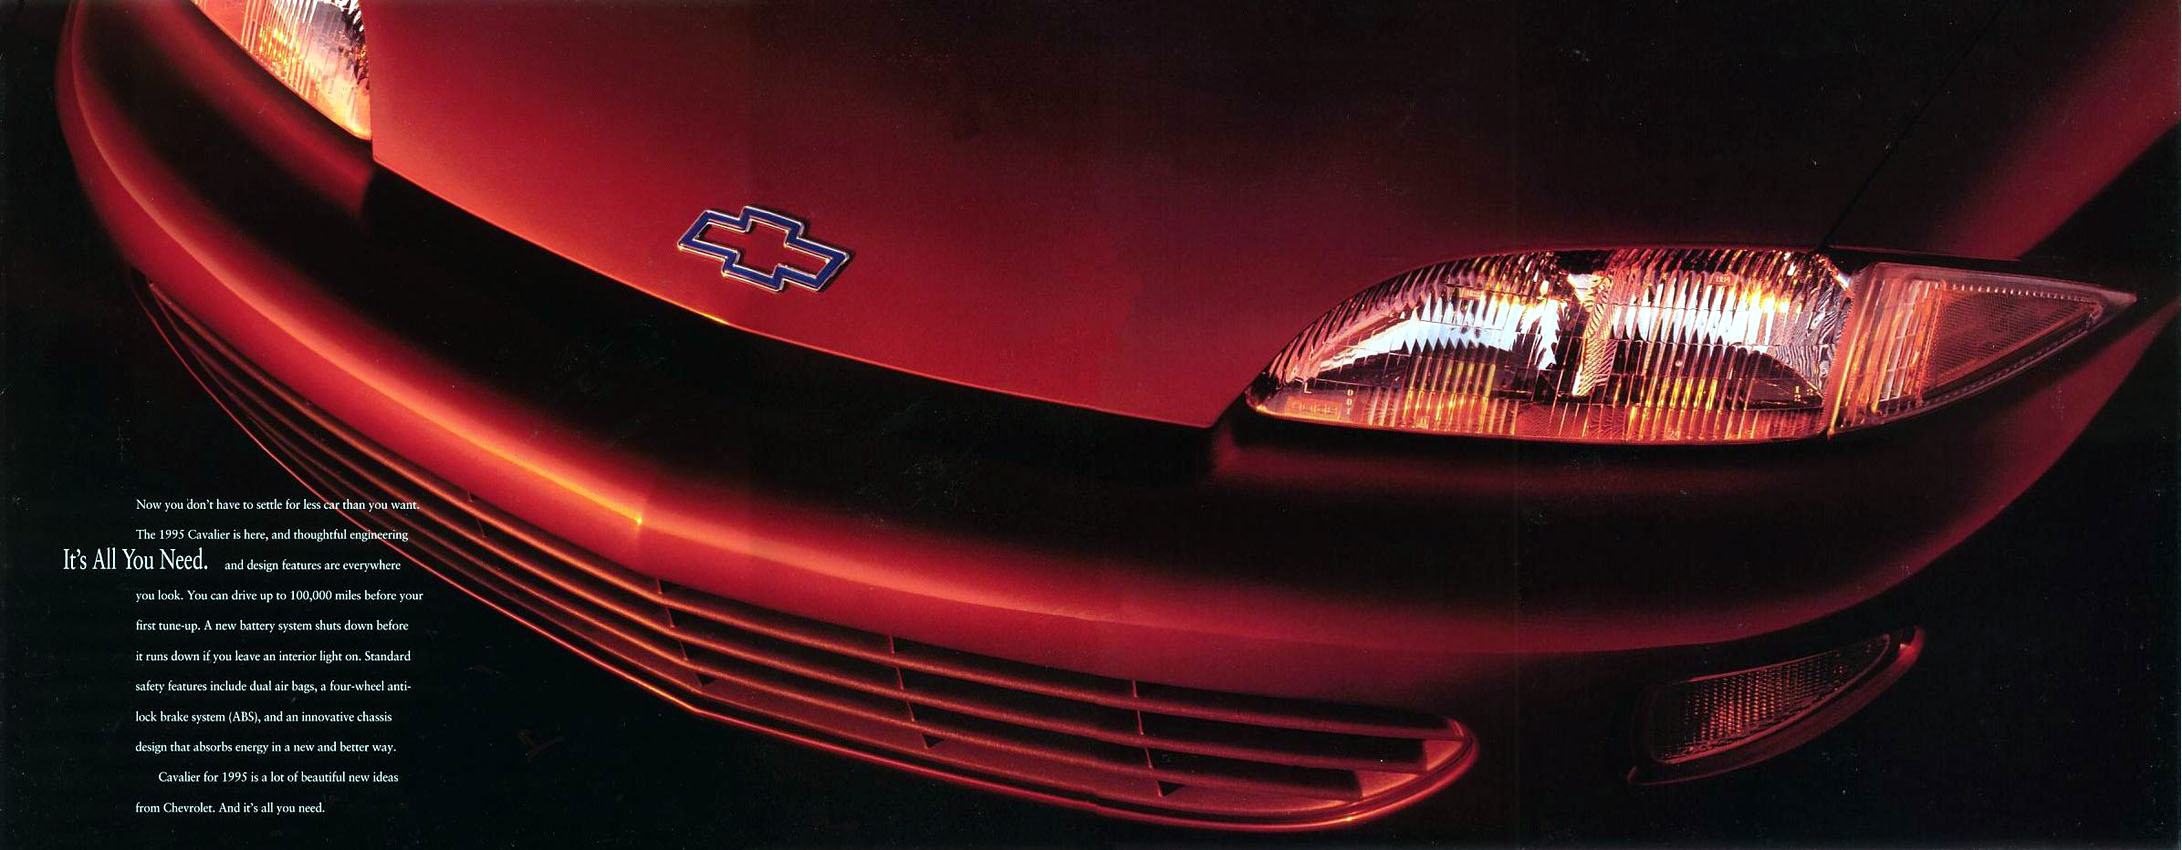 1995_Chevrolet_Cavalier-02-03